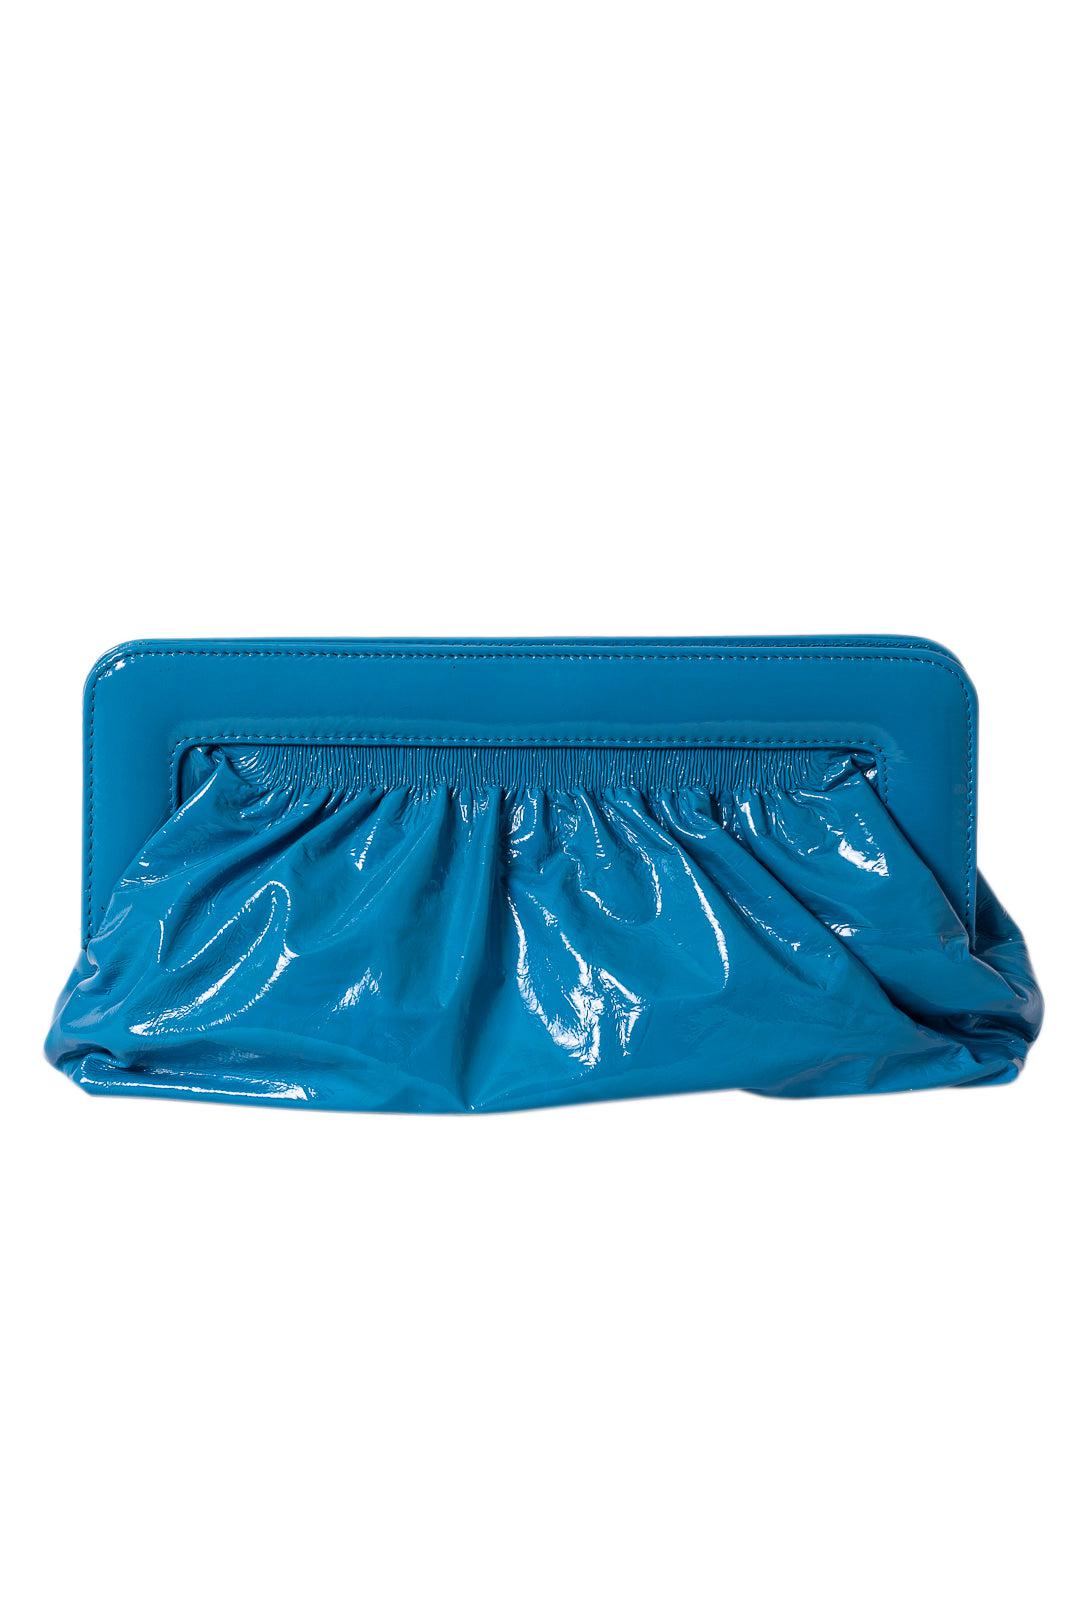 Gestuz-Veldagz clutch bag-10906622 - MALIBU BLUE-dgallerystore